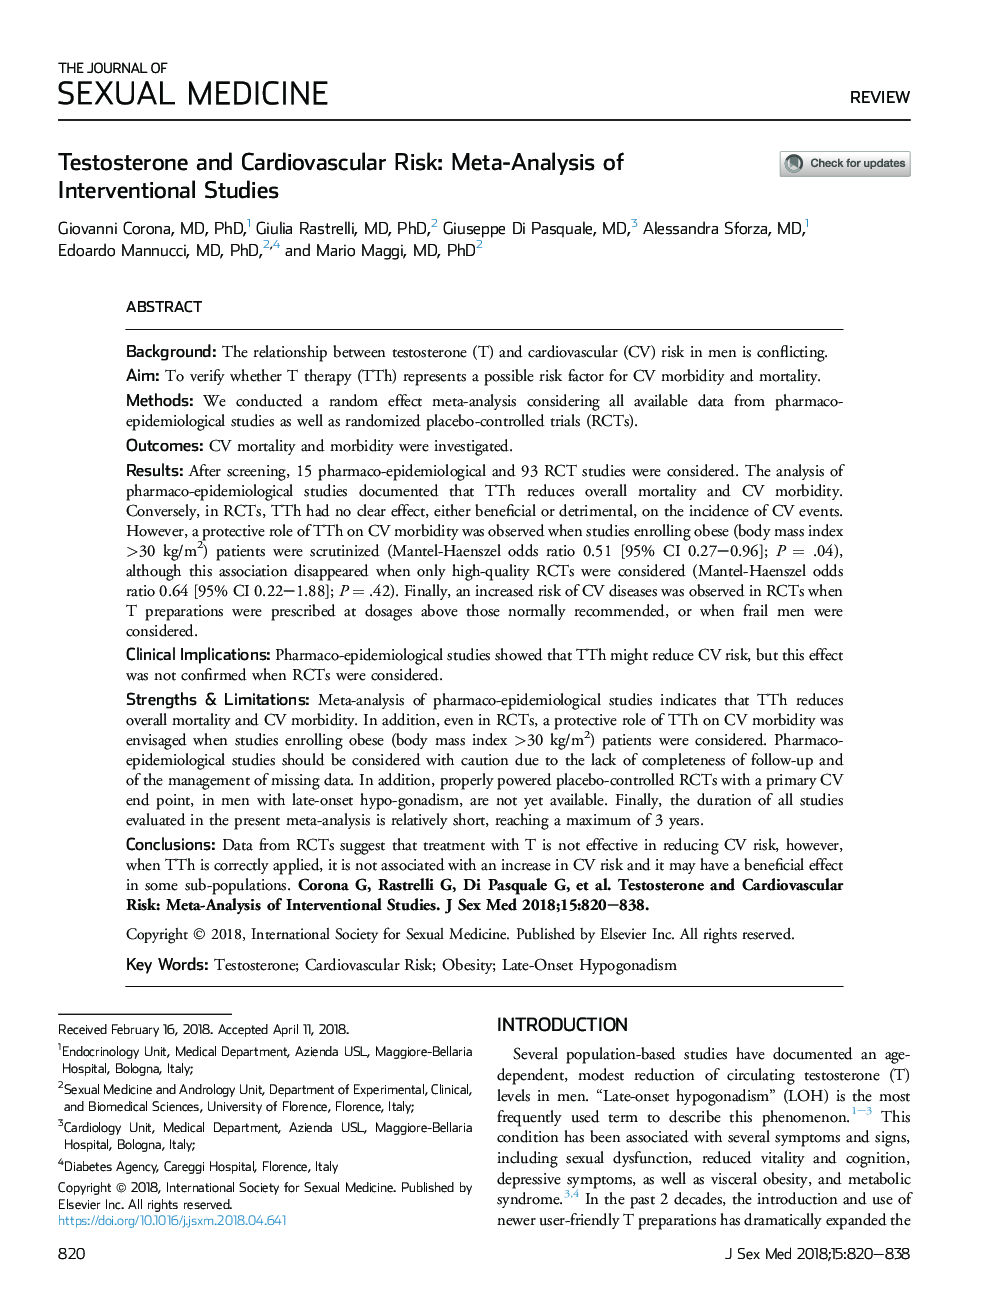 Testosterone and Cardiovascular Risk: Meta-Analysis of Interventional Studies